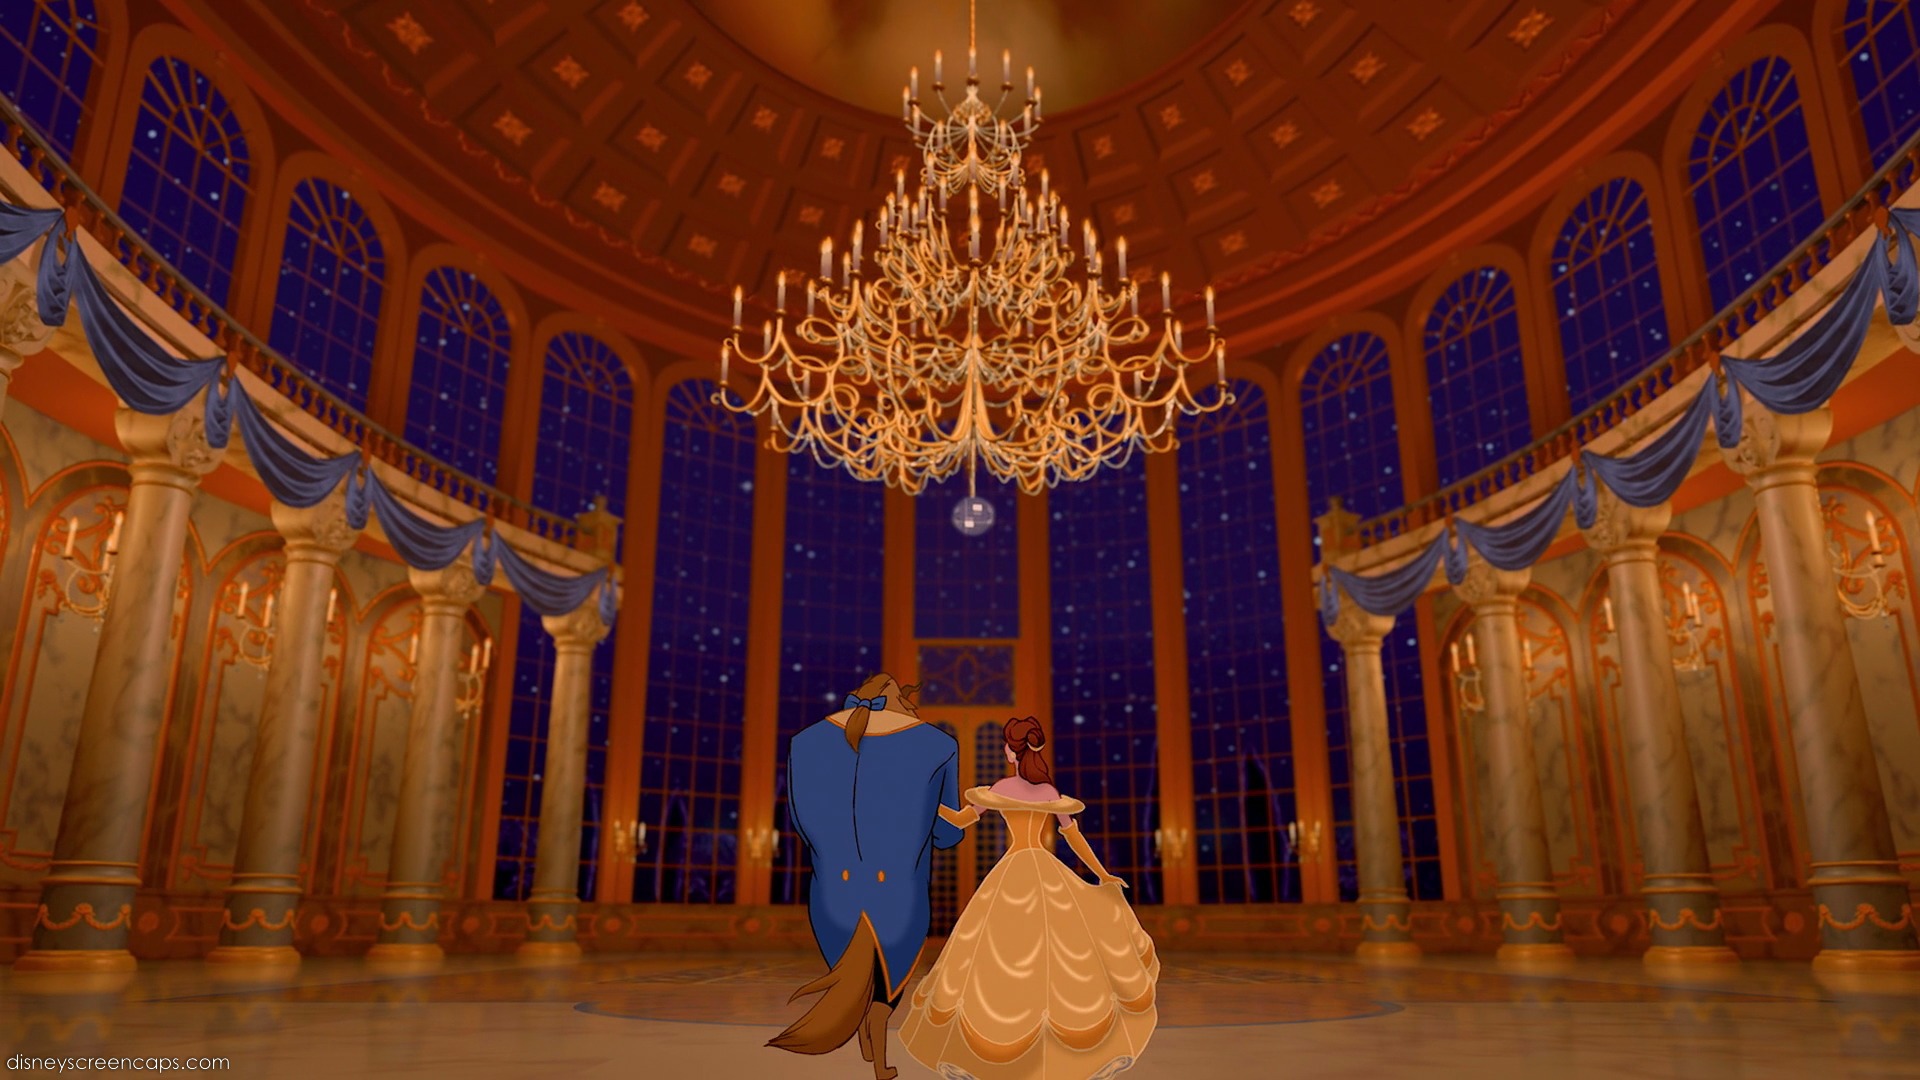 Beauty And The Beast Disney Princess Wallpaper